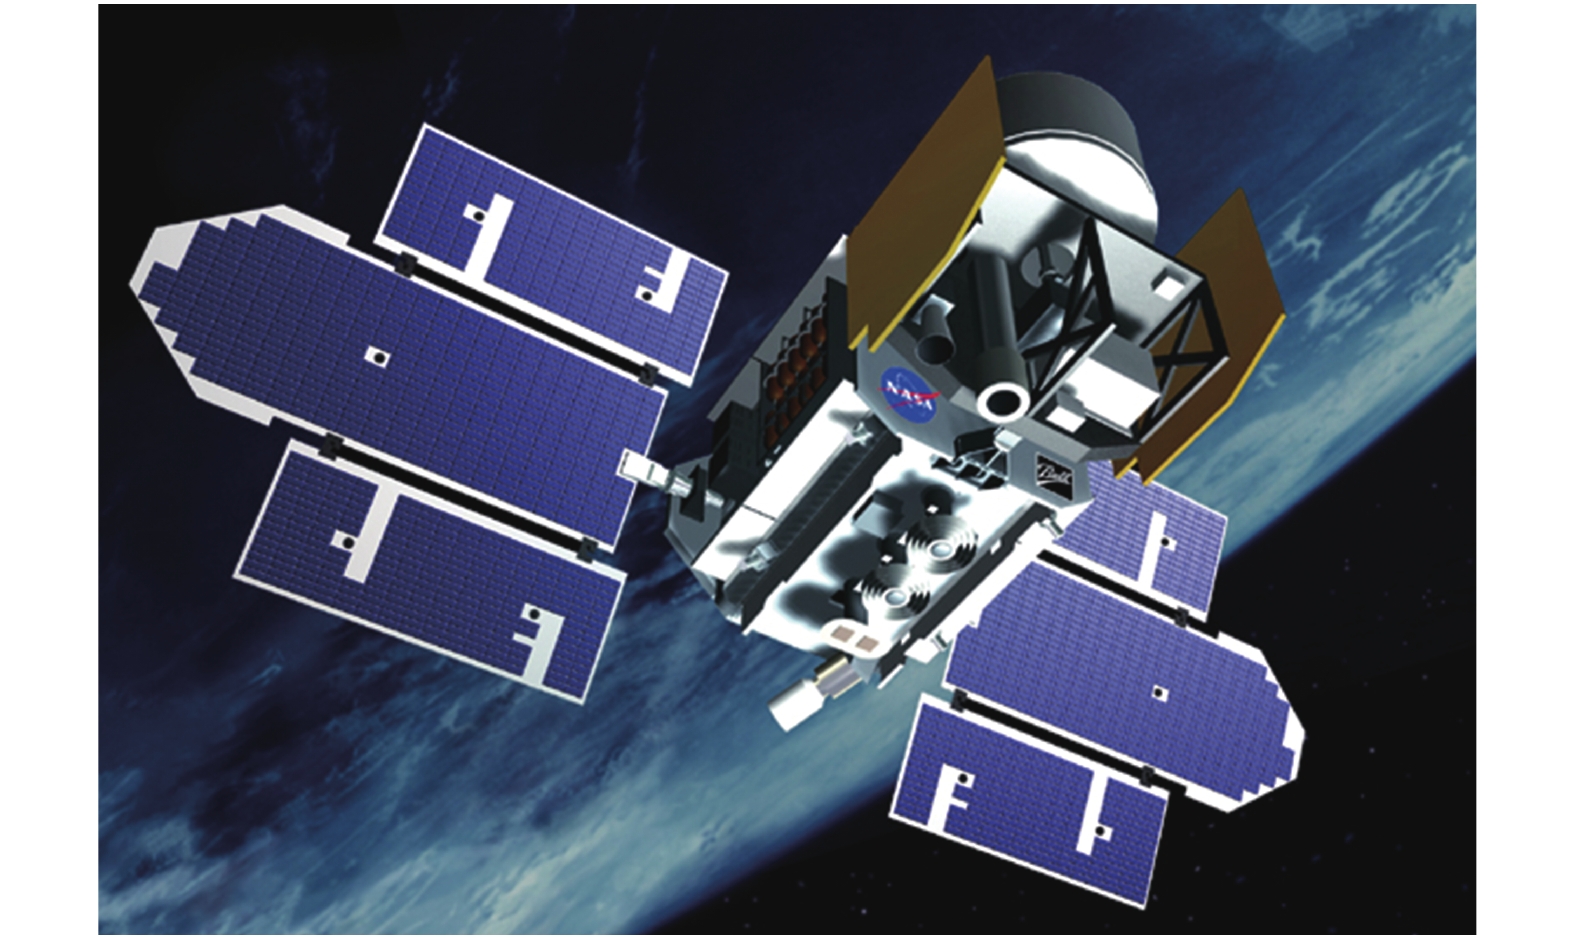 ICEsat-1 satellite image